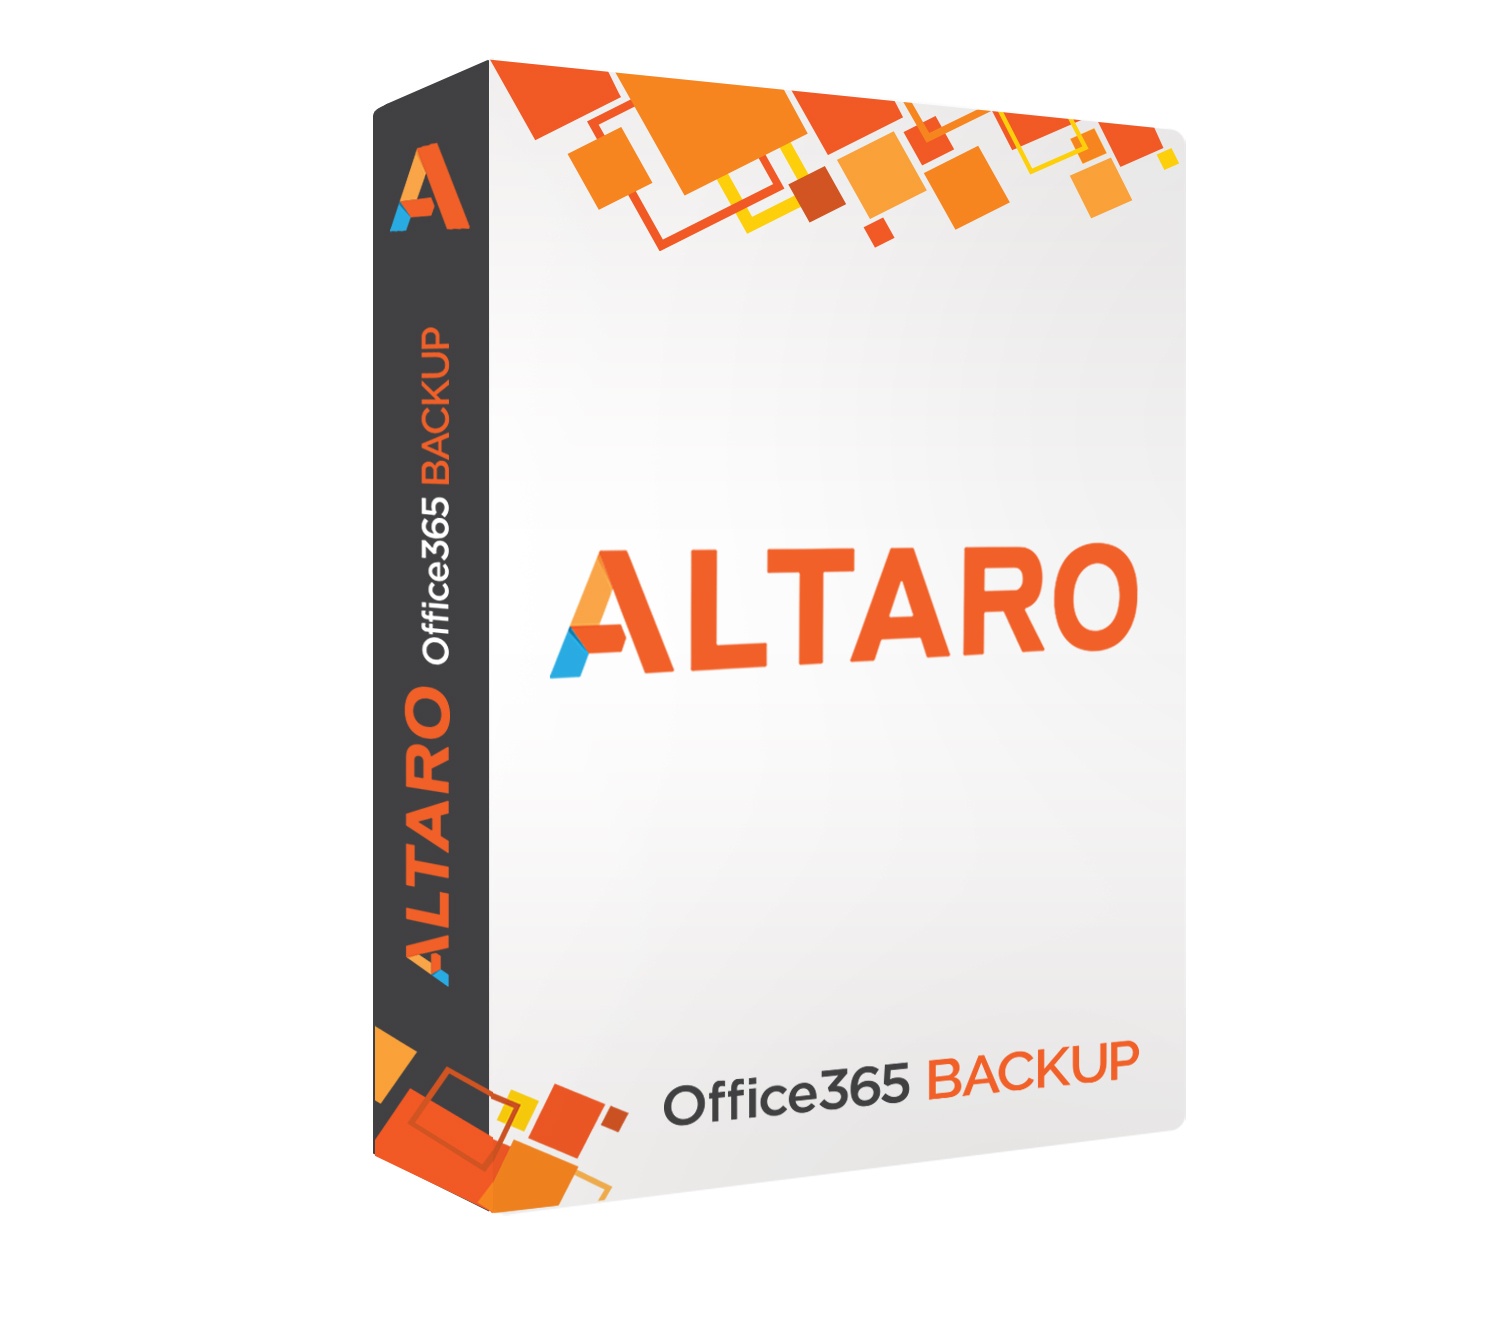 Altaro Office 365 Backup download